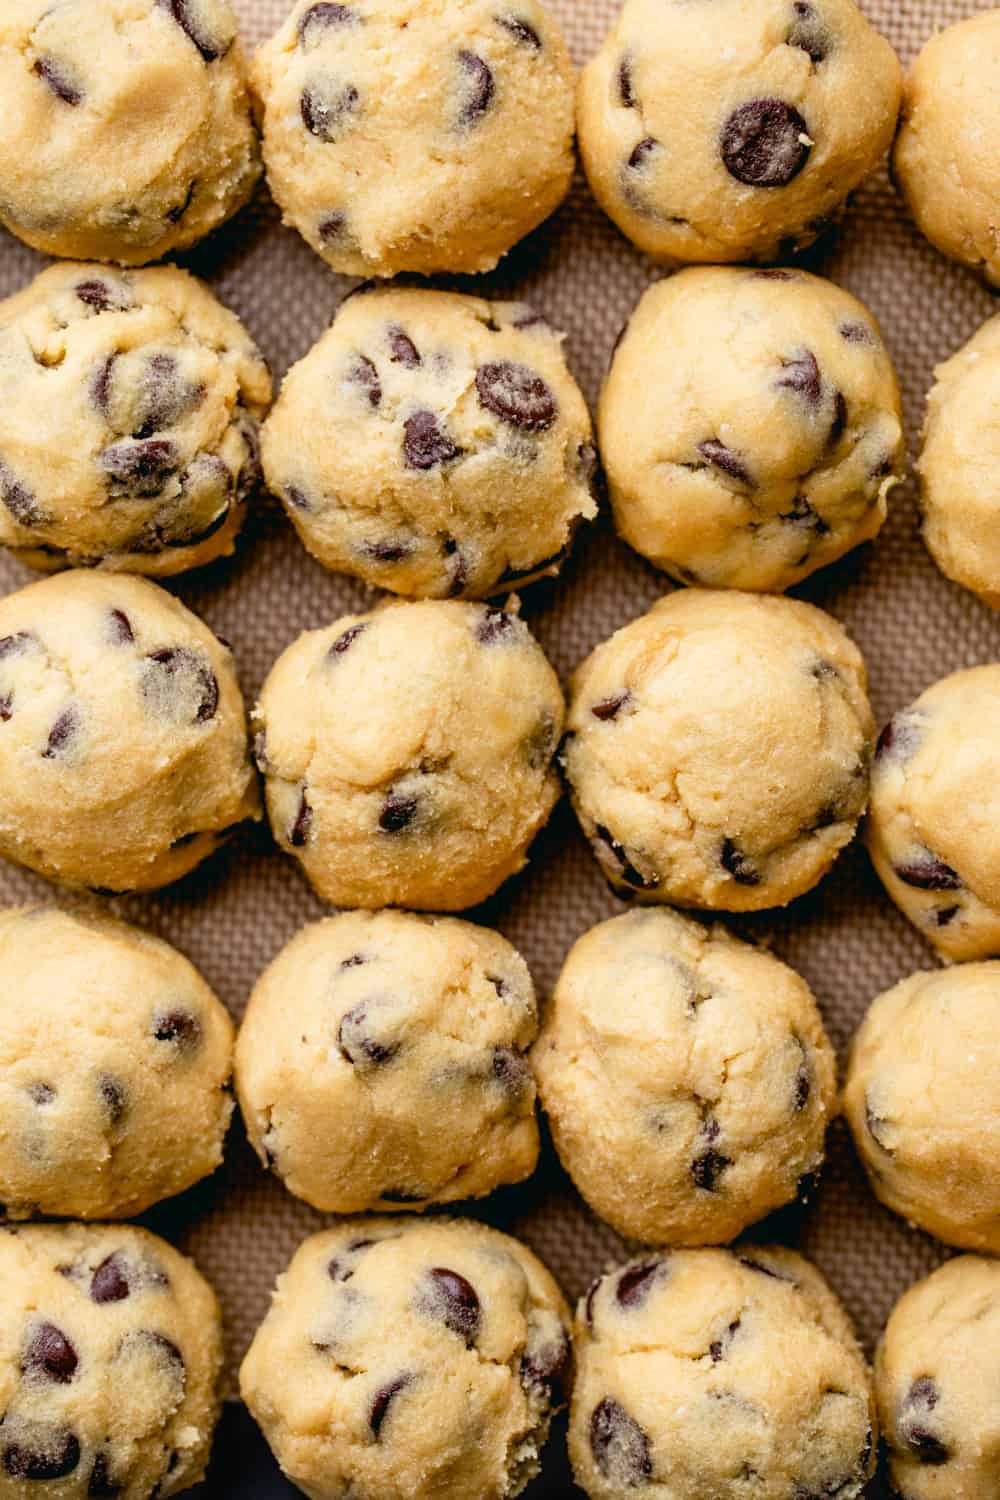 https://www.mybakingaddiction.com/wp-content/uploads/2019/04/How-to-Freeze-Cookie-Dough-Process-Shots-6-of-13_resized.jpg